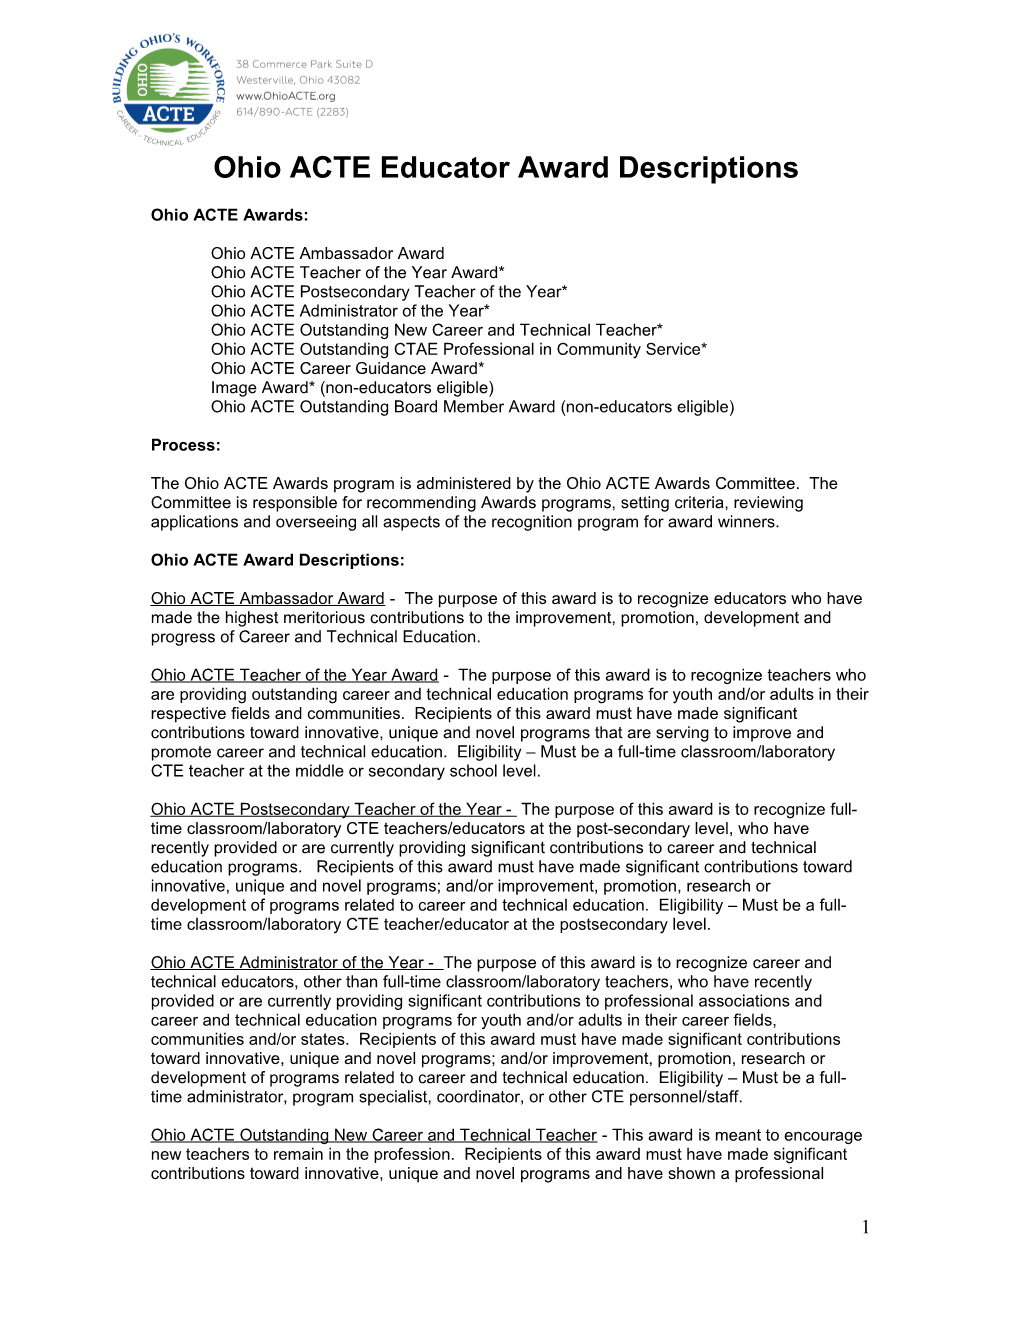 2008 Ohio ACTE Awards Nomination Form